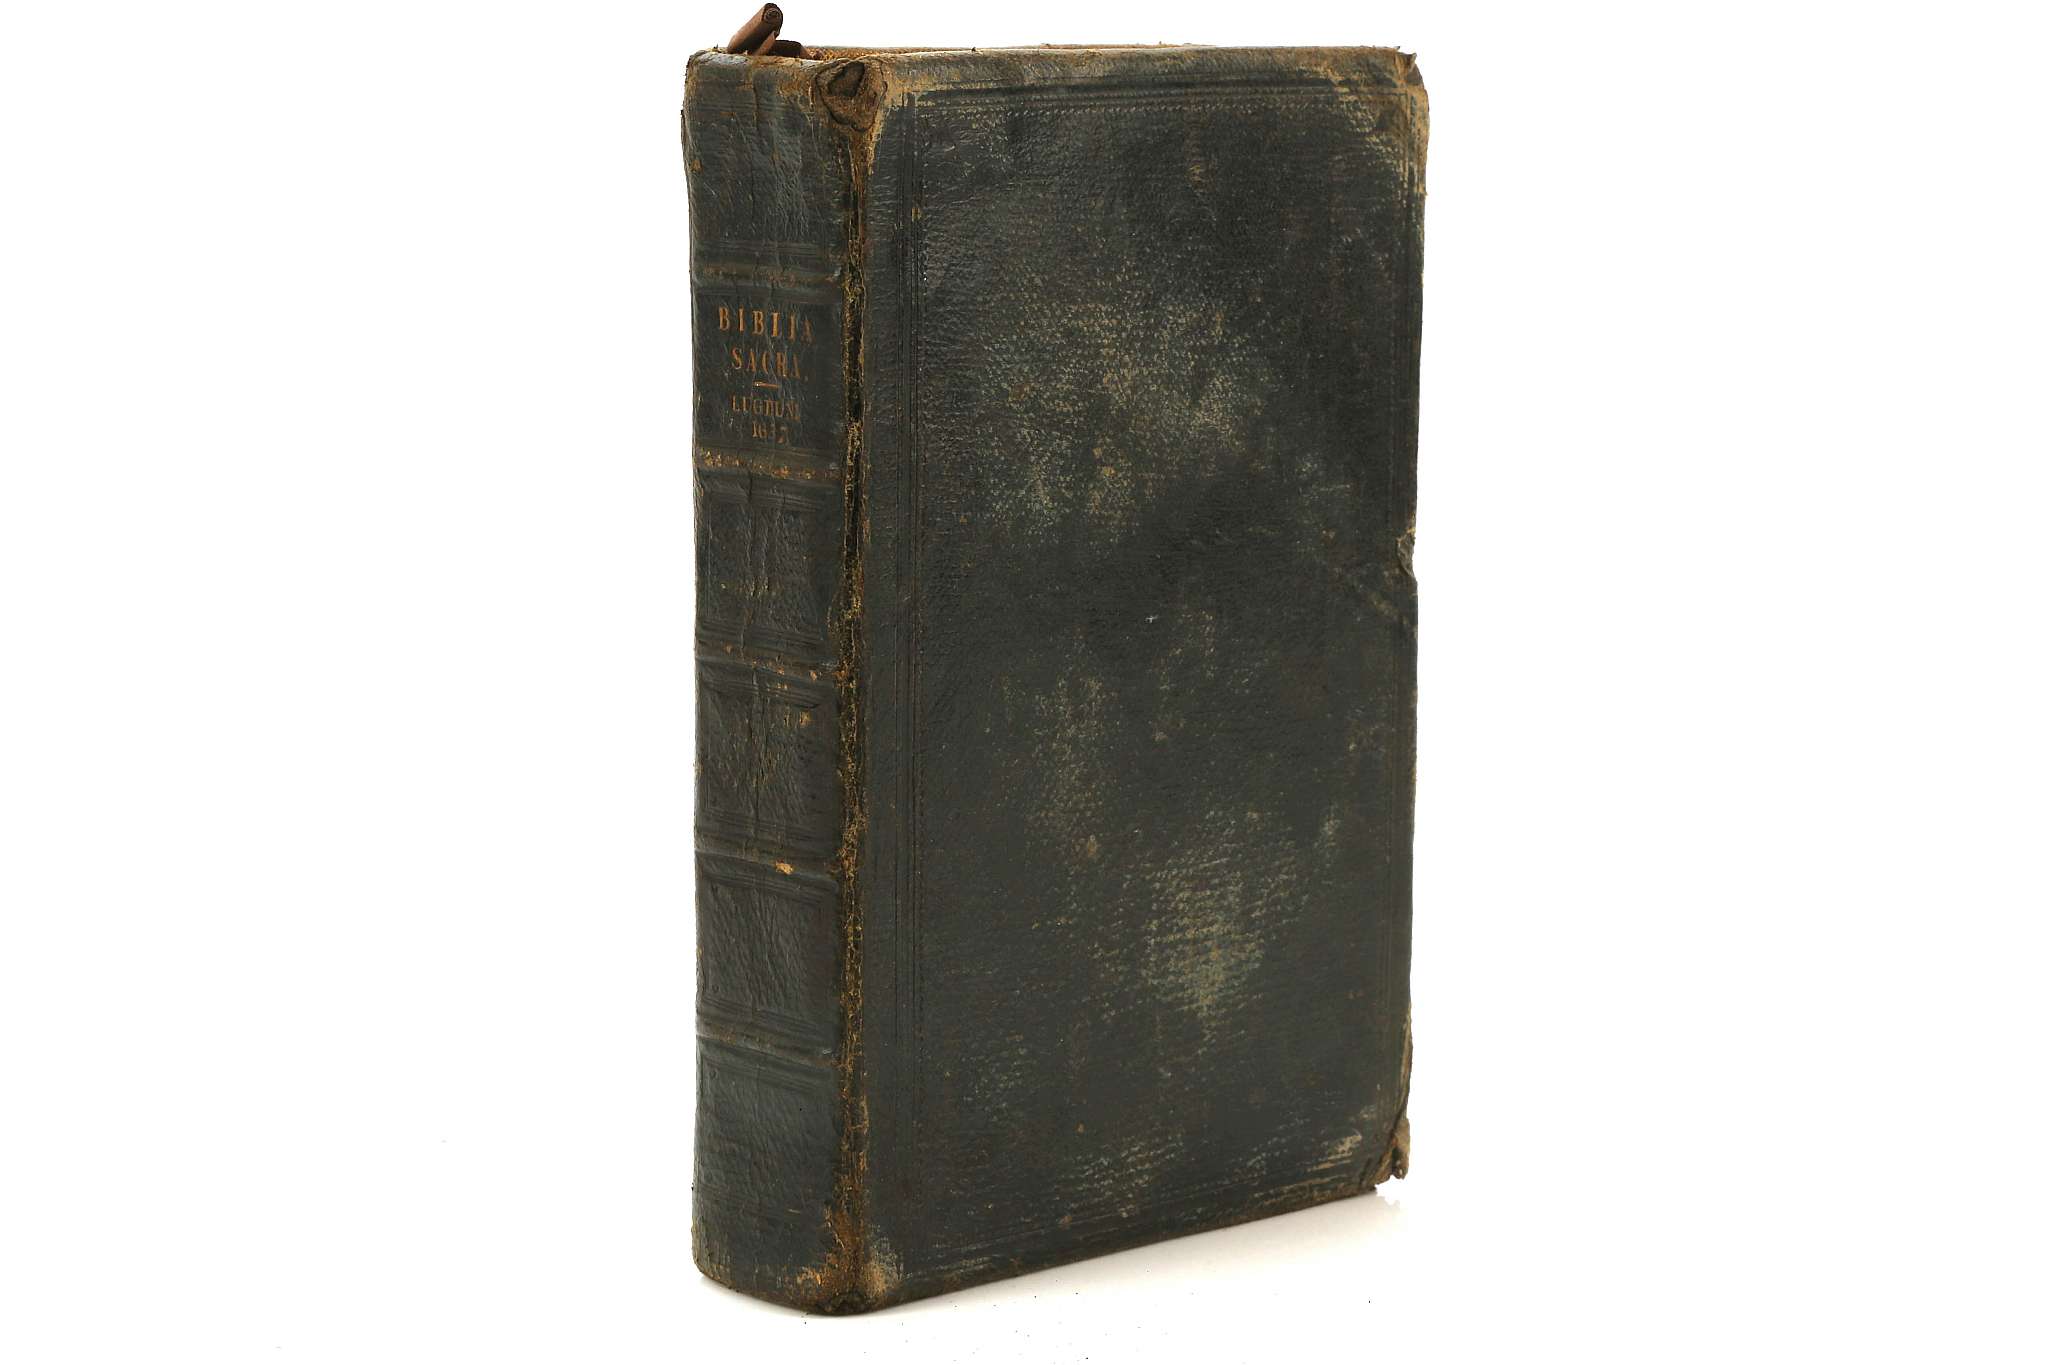 Biblia Sacra Vulgatae Editions. Lugduni: Claudii de Villiers, 1637. 8vo. Engraved title page (